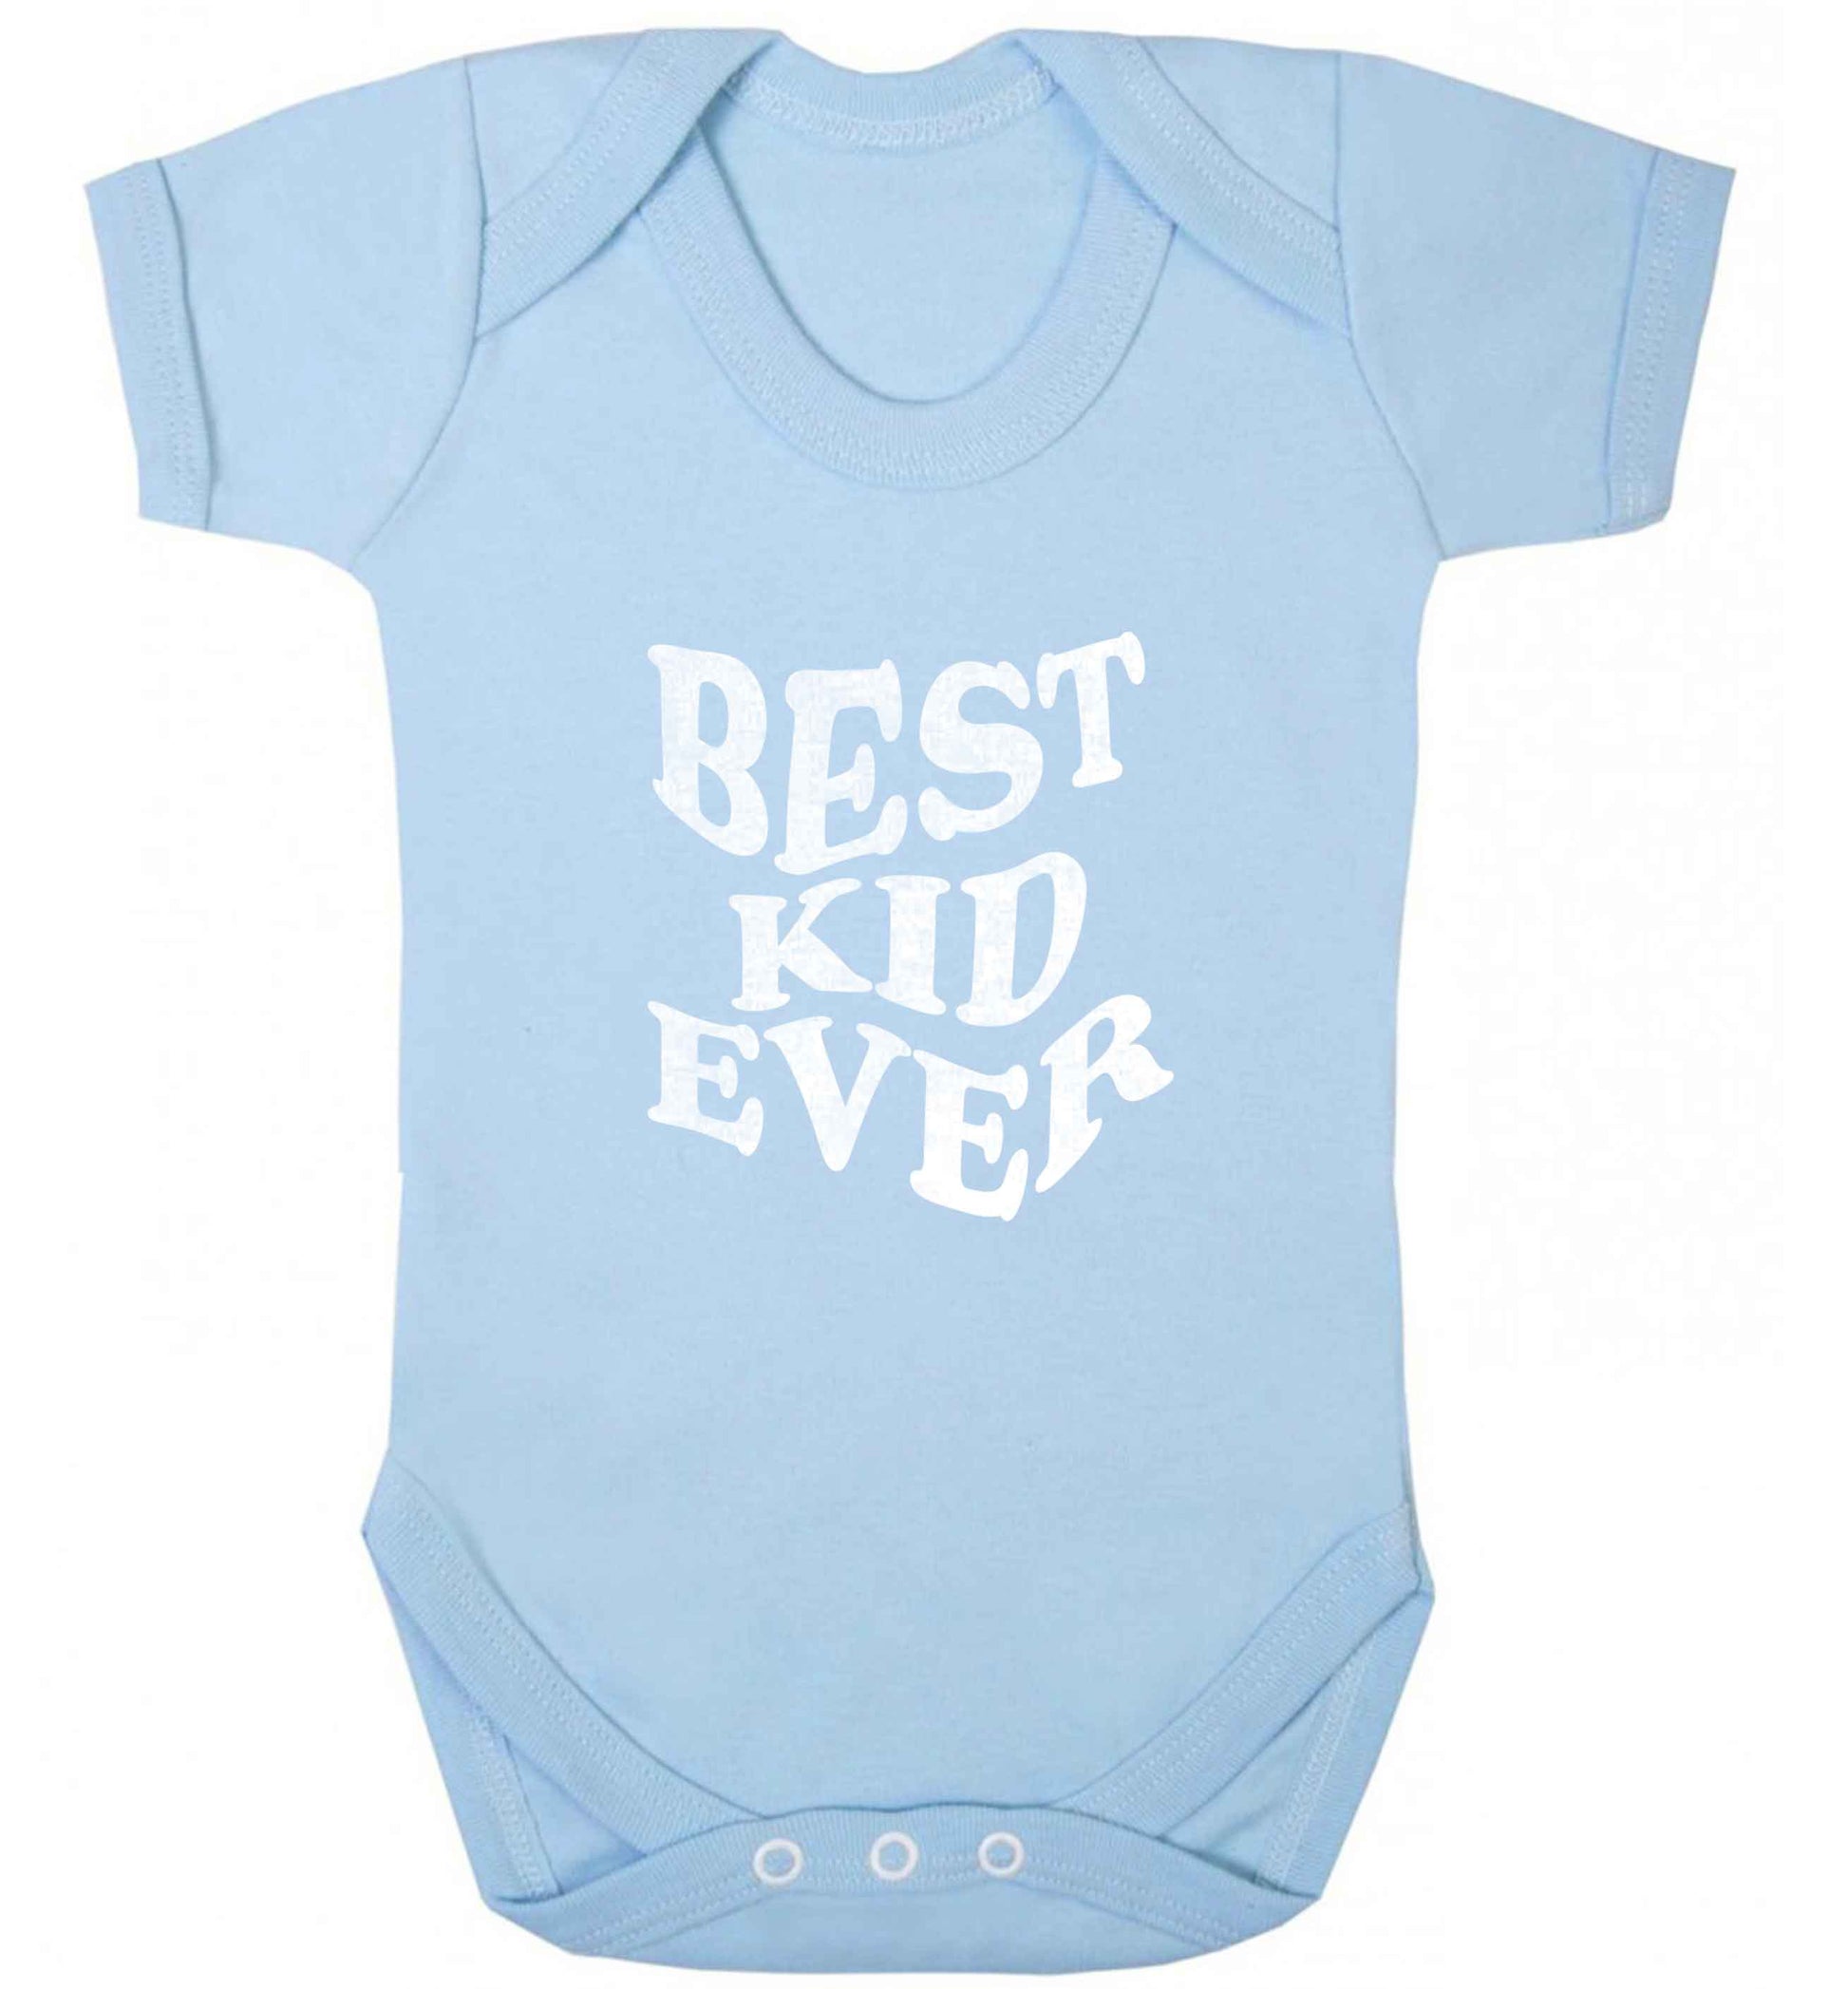 Best kid ever baby vest pale blue 18-24 months